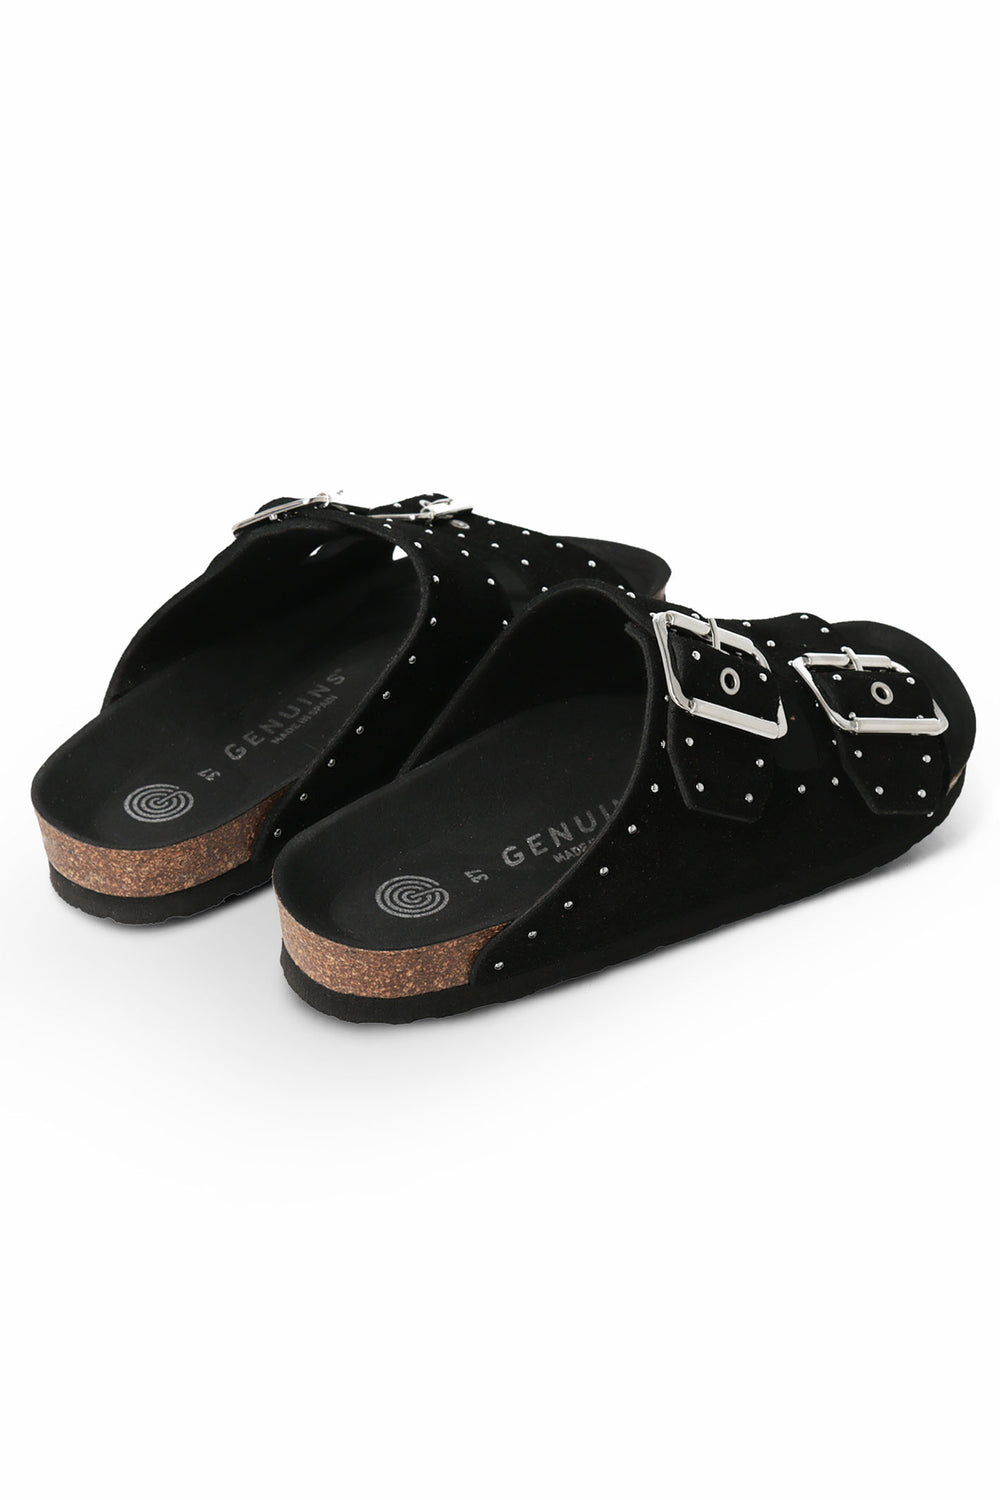 Genuins Honolulu Lead Black Velour Studded Sandals - Experience Boutique